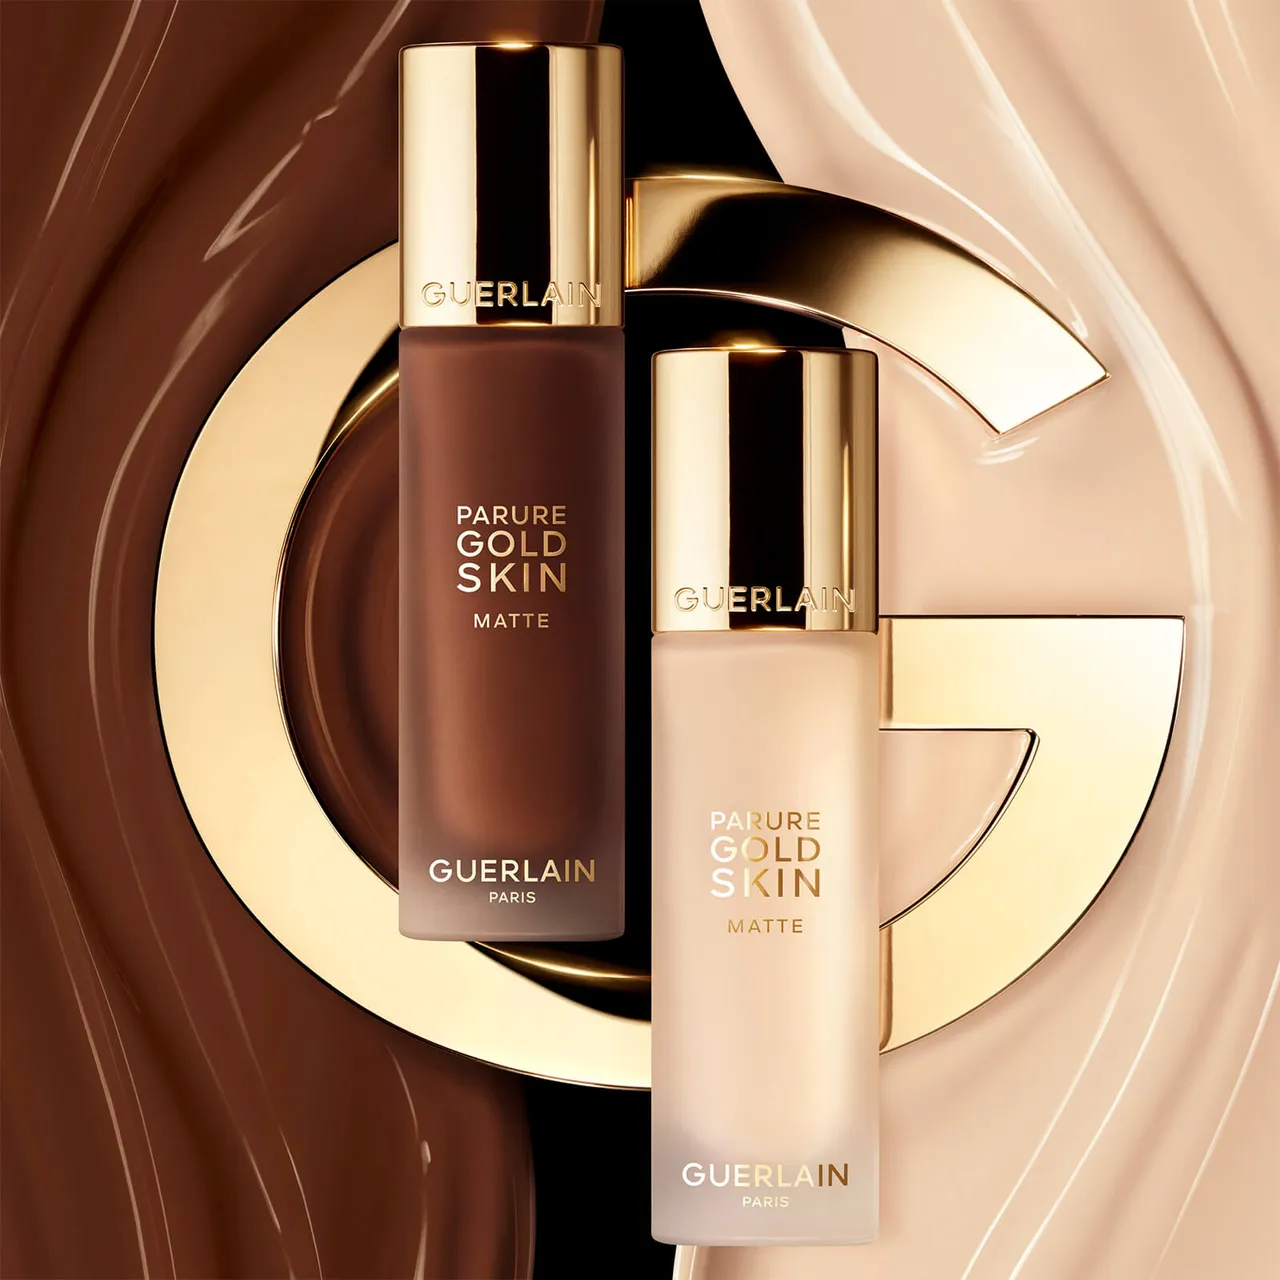 Guerlain Parure Gold Skin 24H No-Transfer High Perfection Foundation 35ml (Various Shades) - 0.5C Cool / Rosé